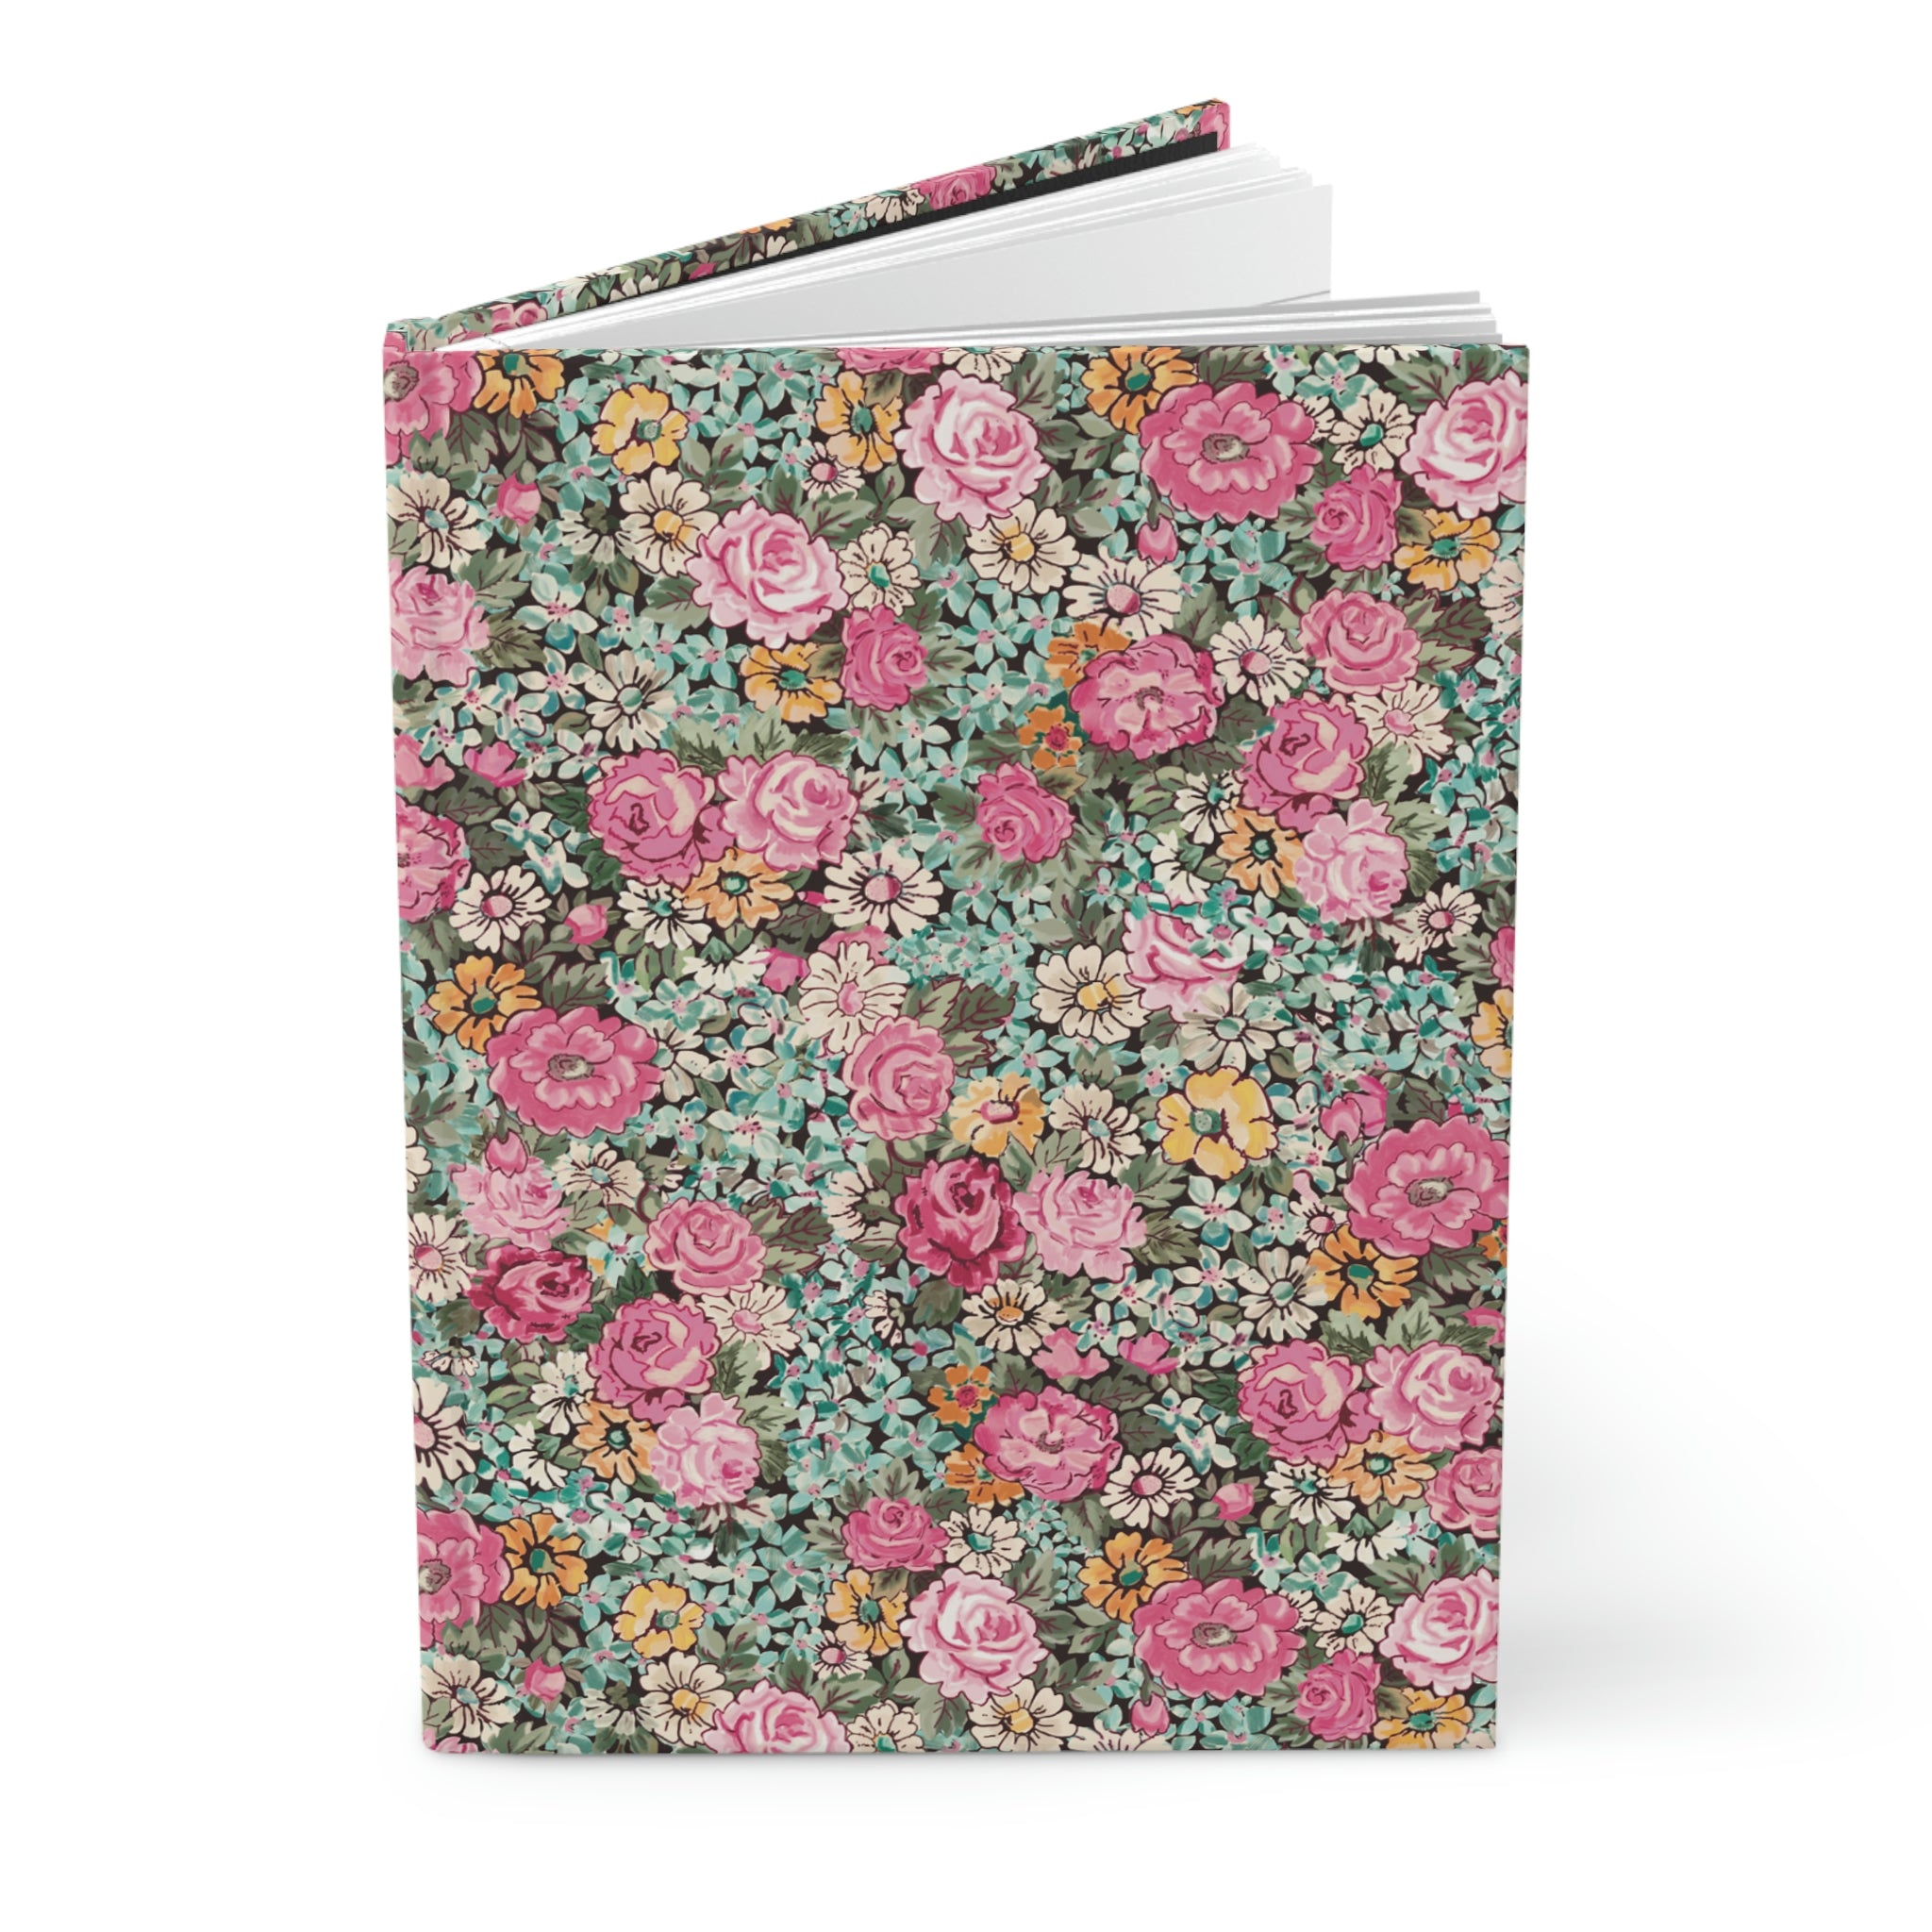 Hardcover Journal Matte / bright pink floral